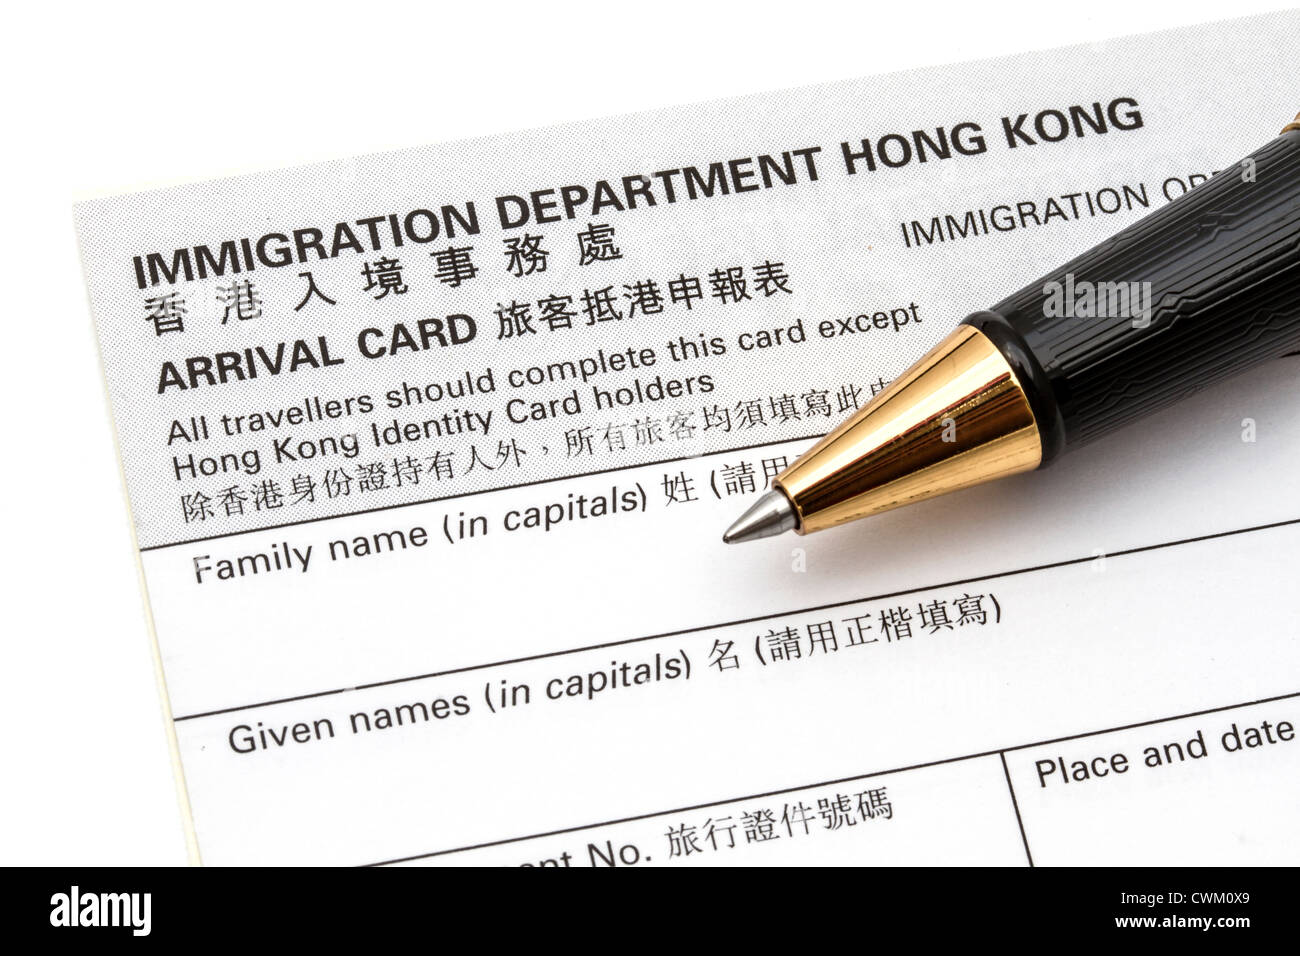 HK immegration department arrival card Stock Photo